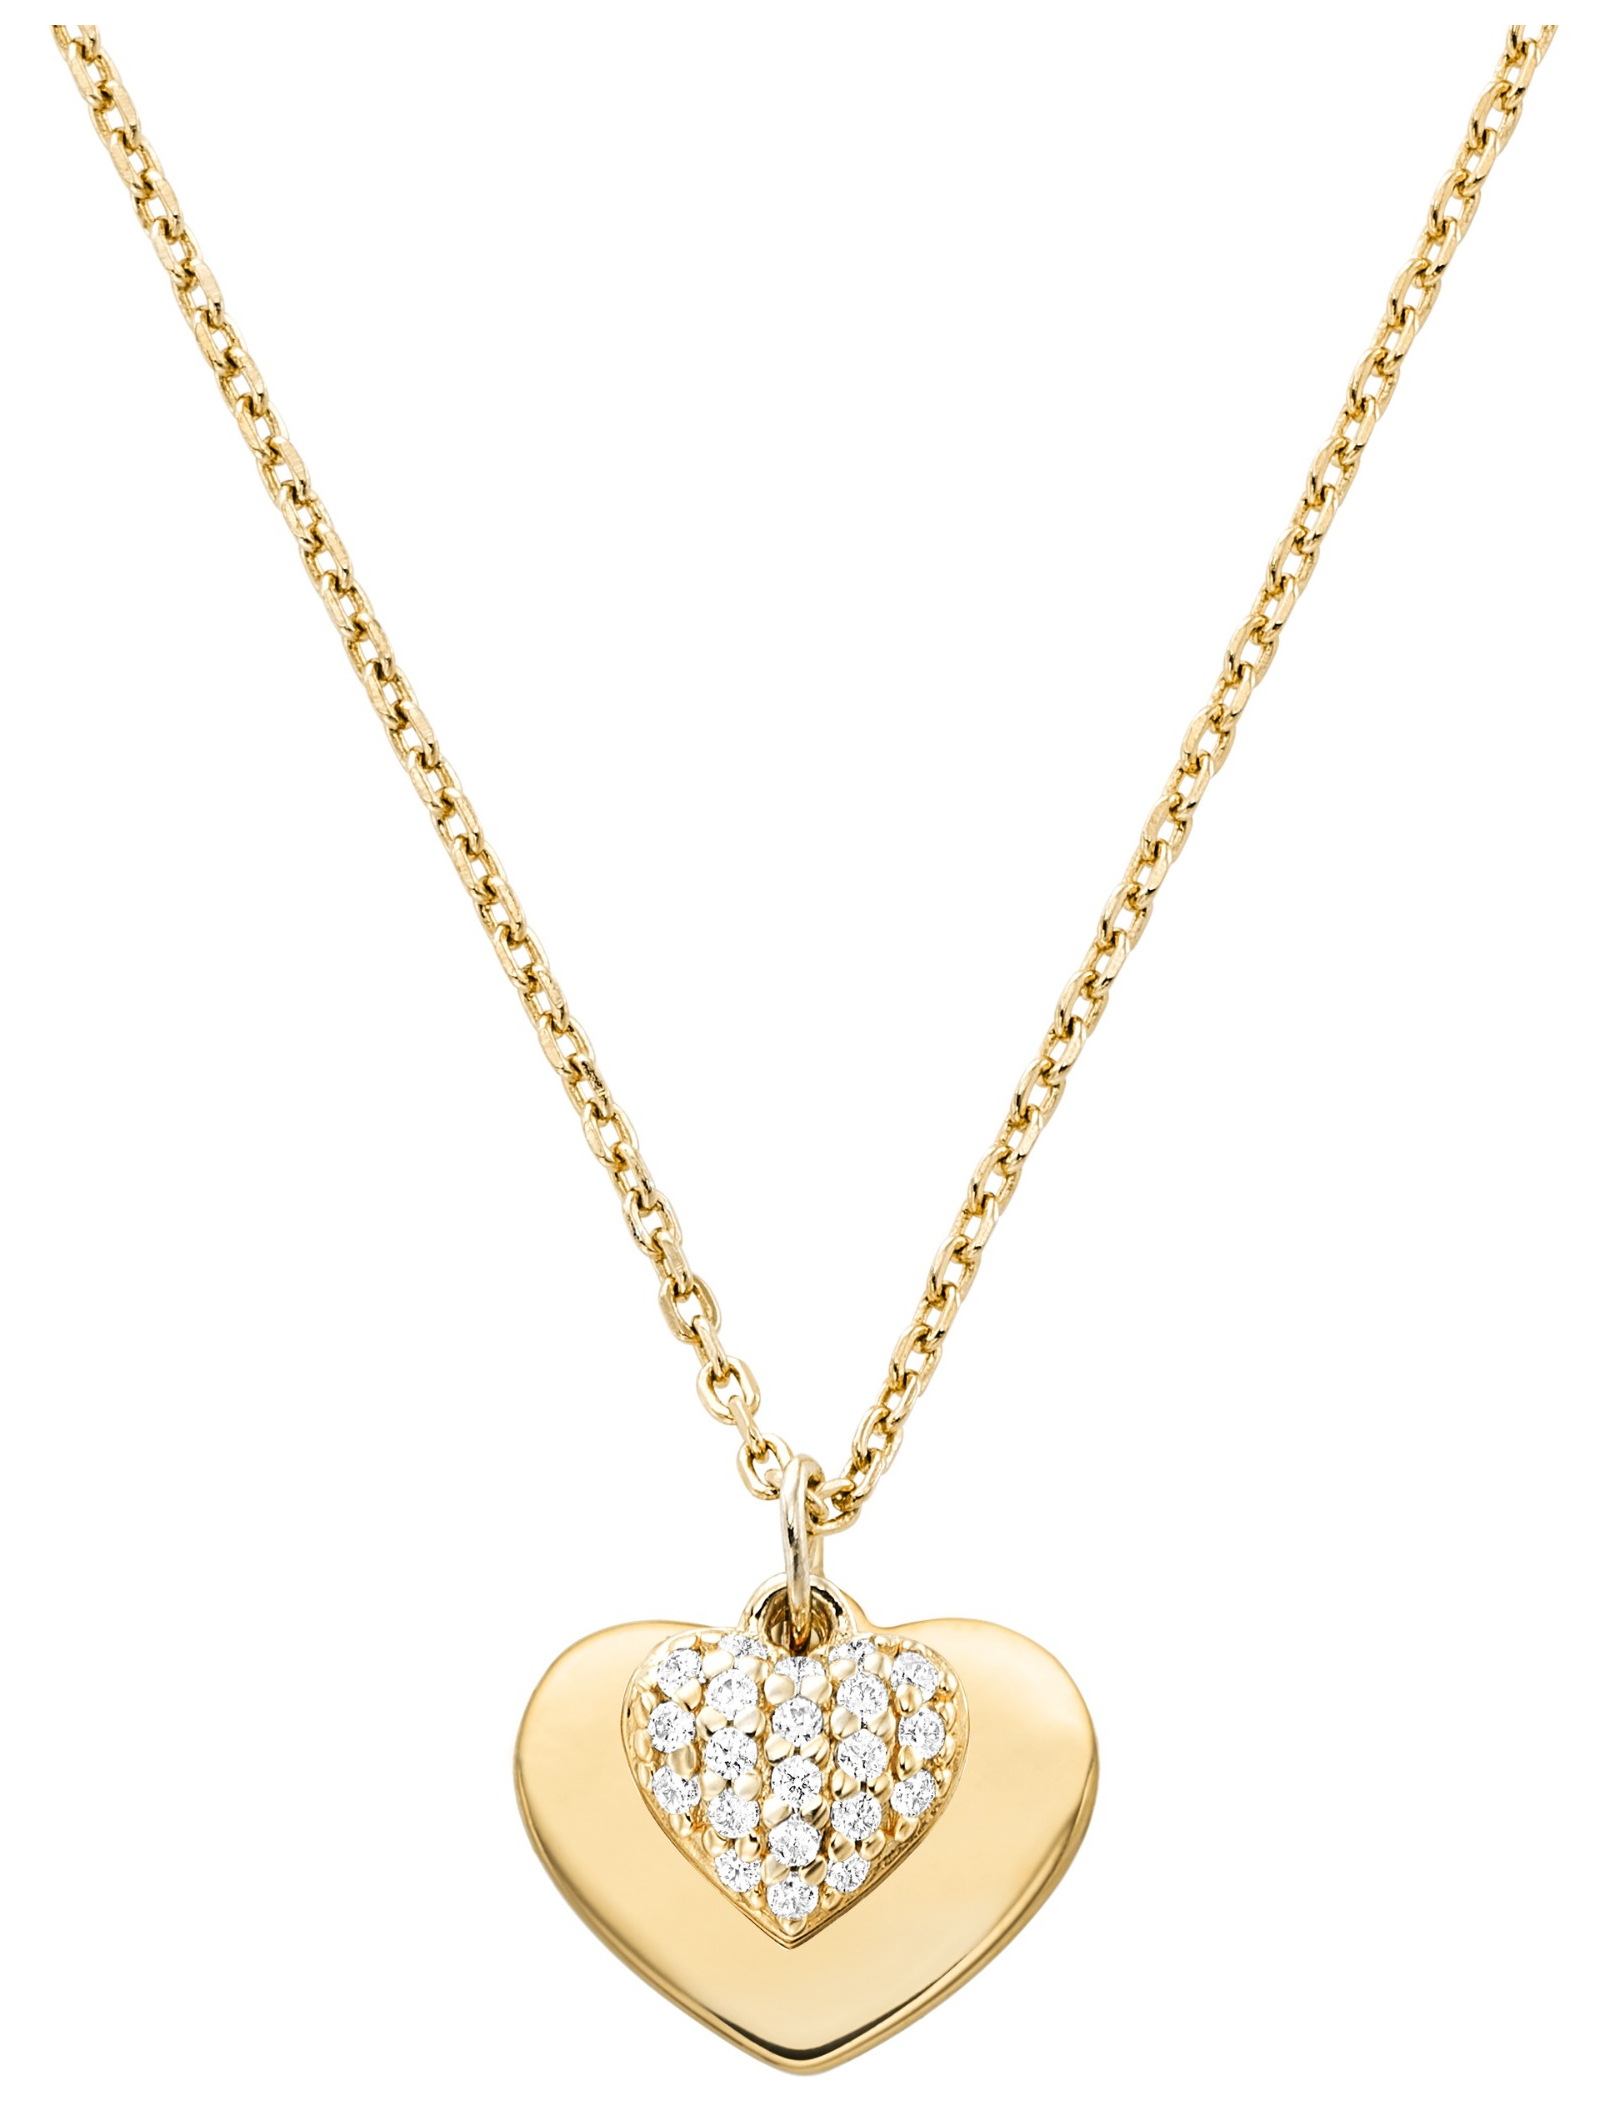 Top 10 Michael Kors Jewellery For Summer - First Class Watches Blog